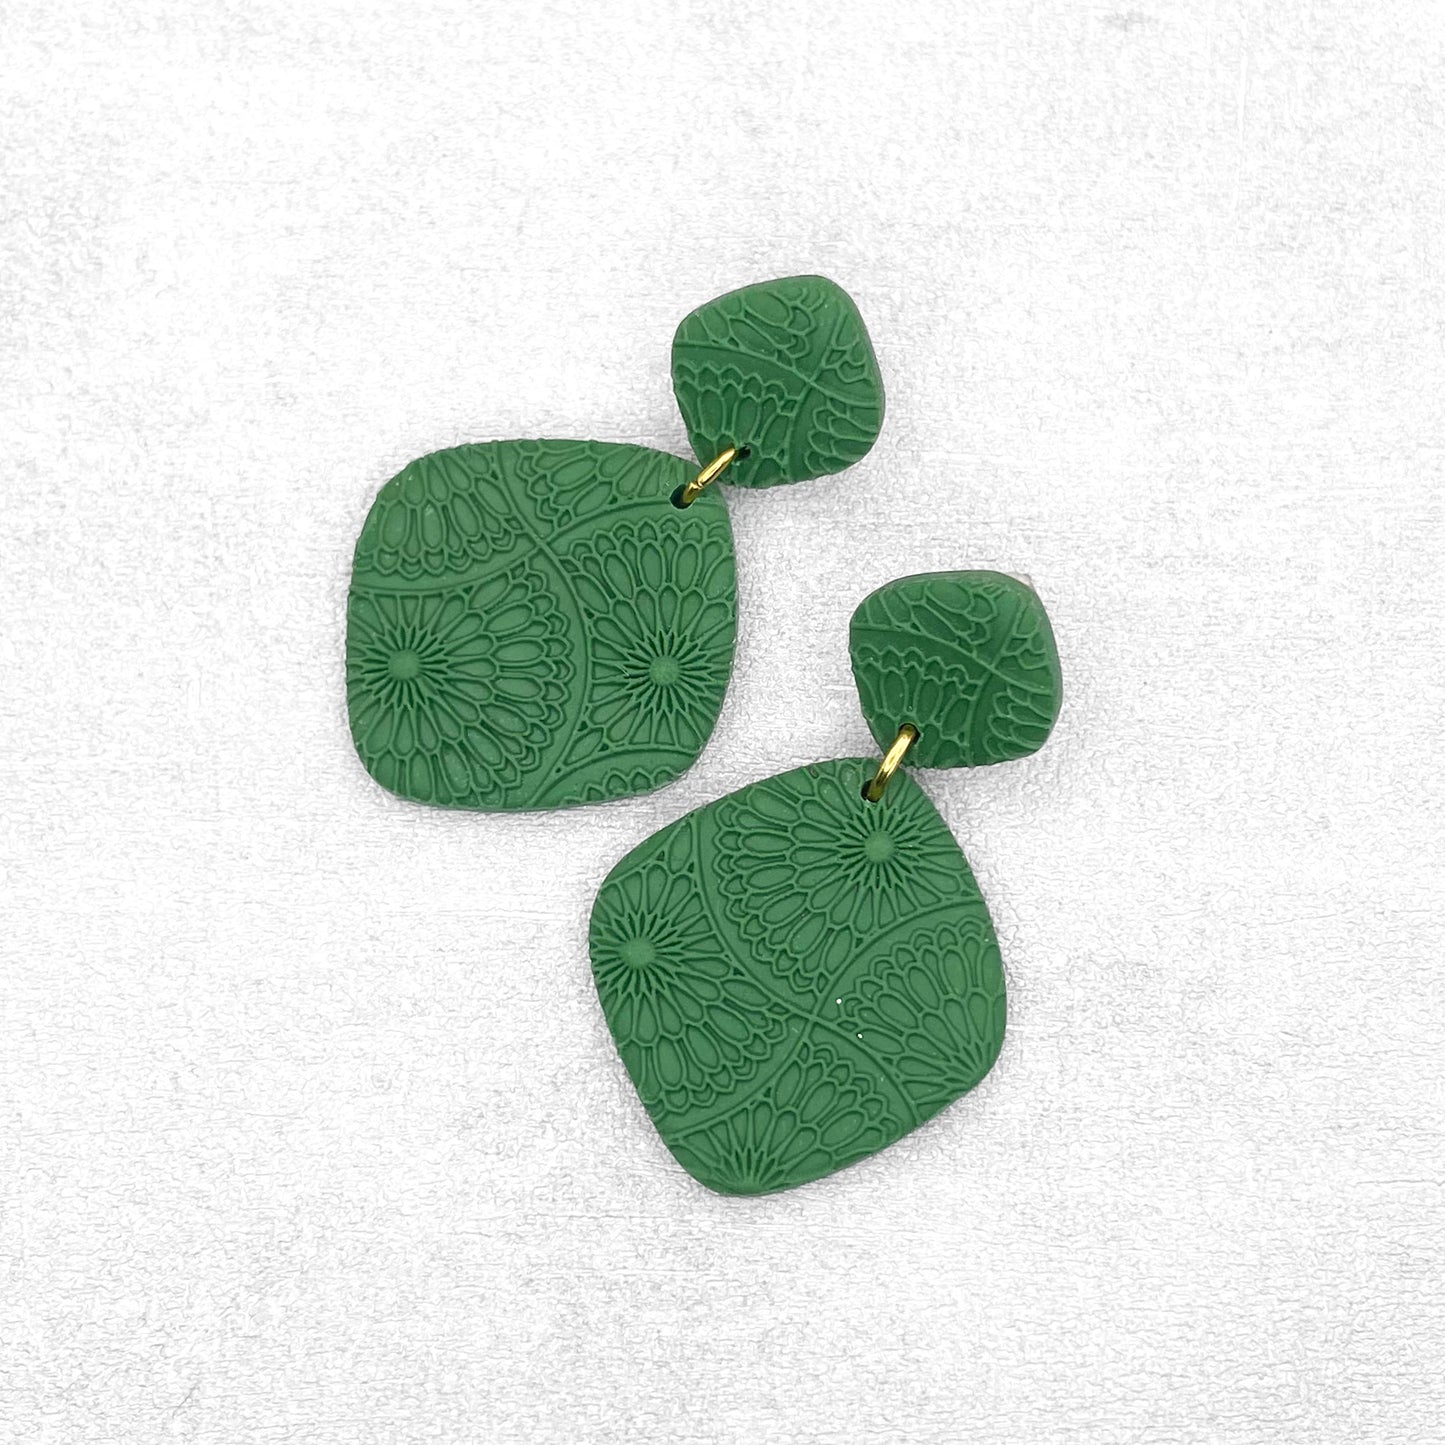 Forest green rhombus earrings. Handmade polymer clay earrings.